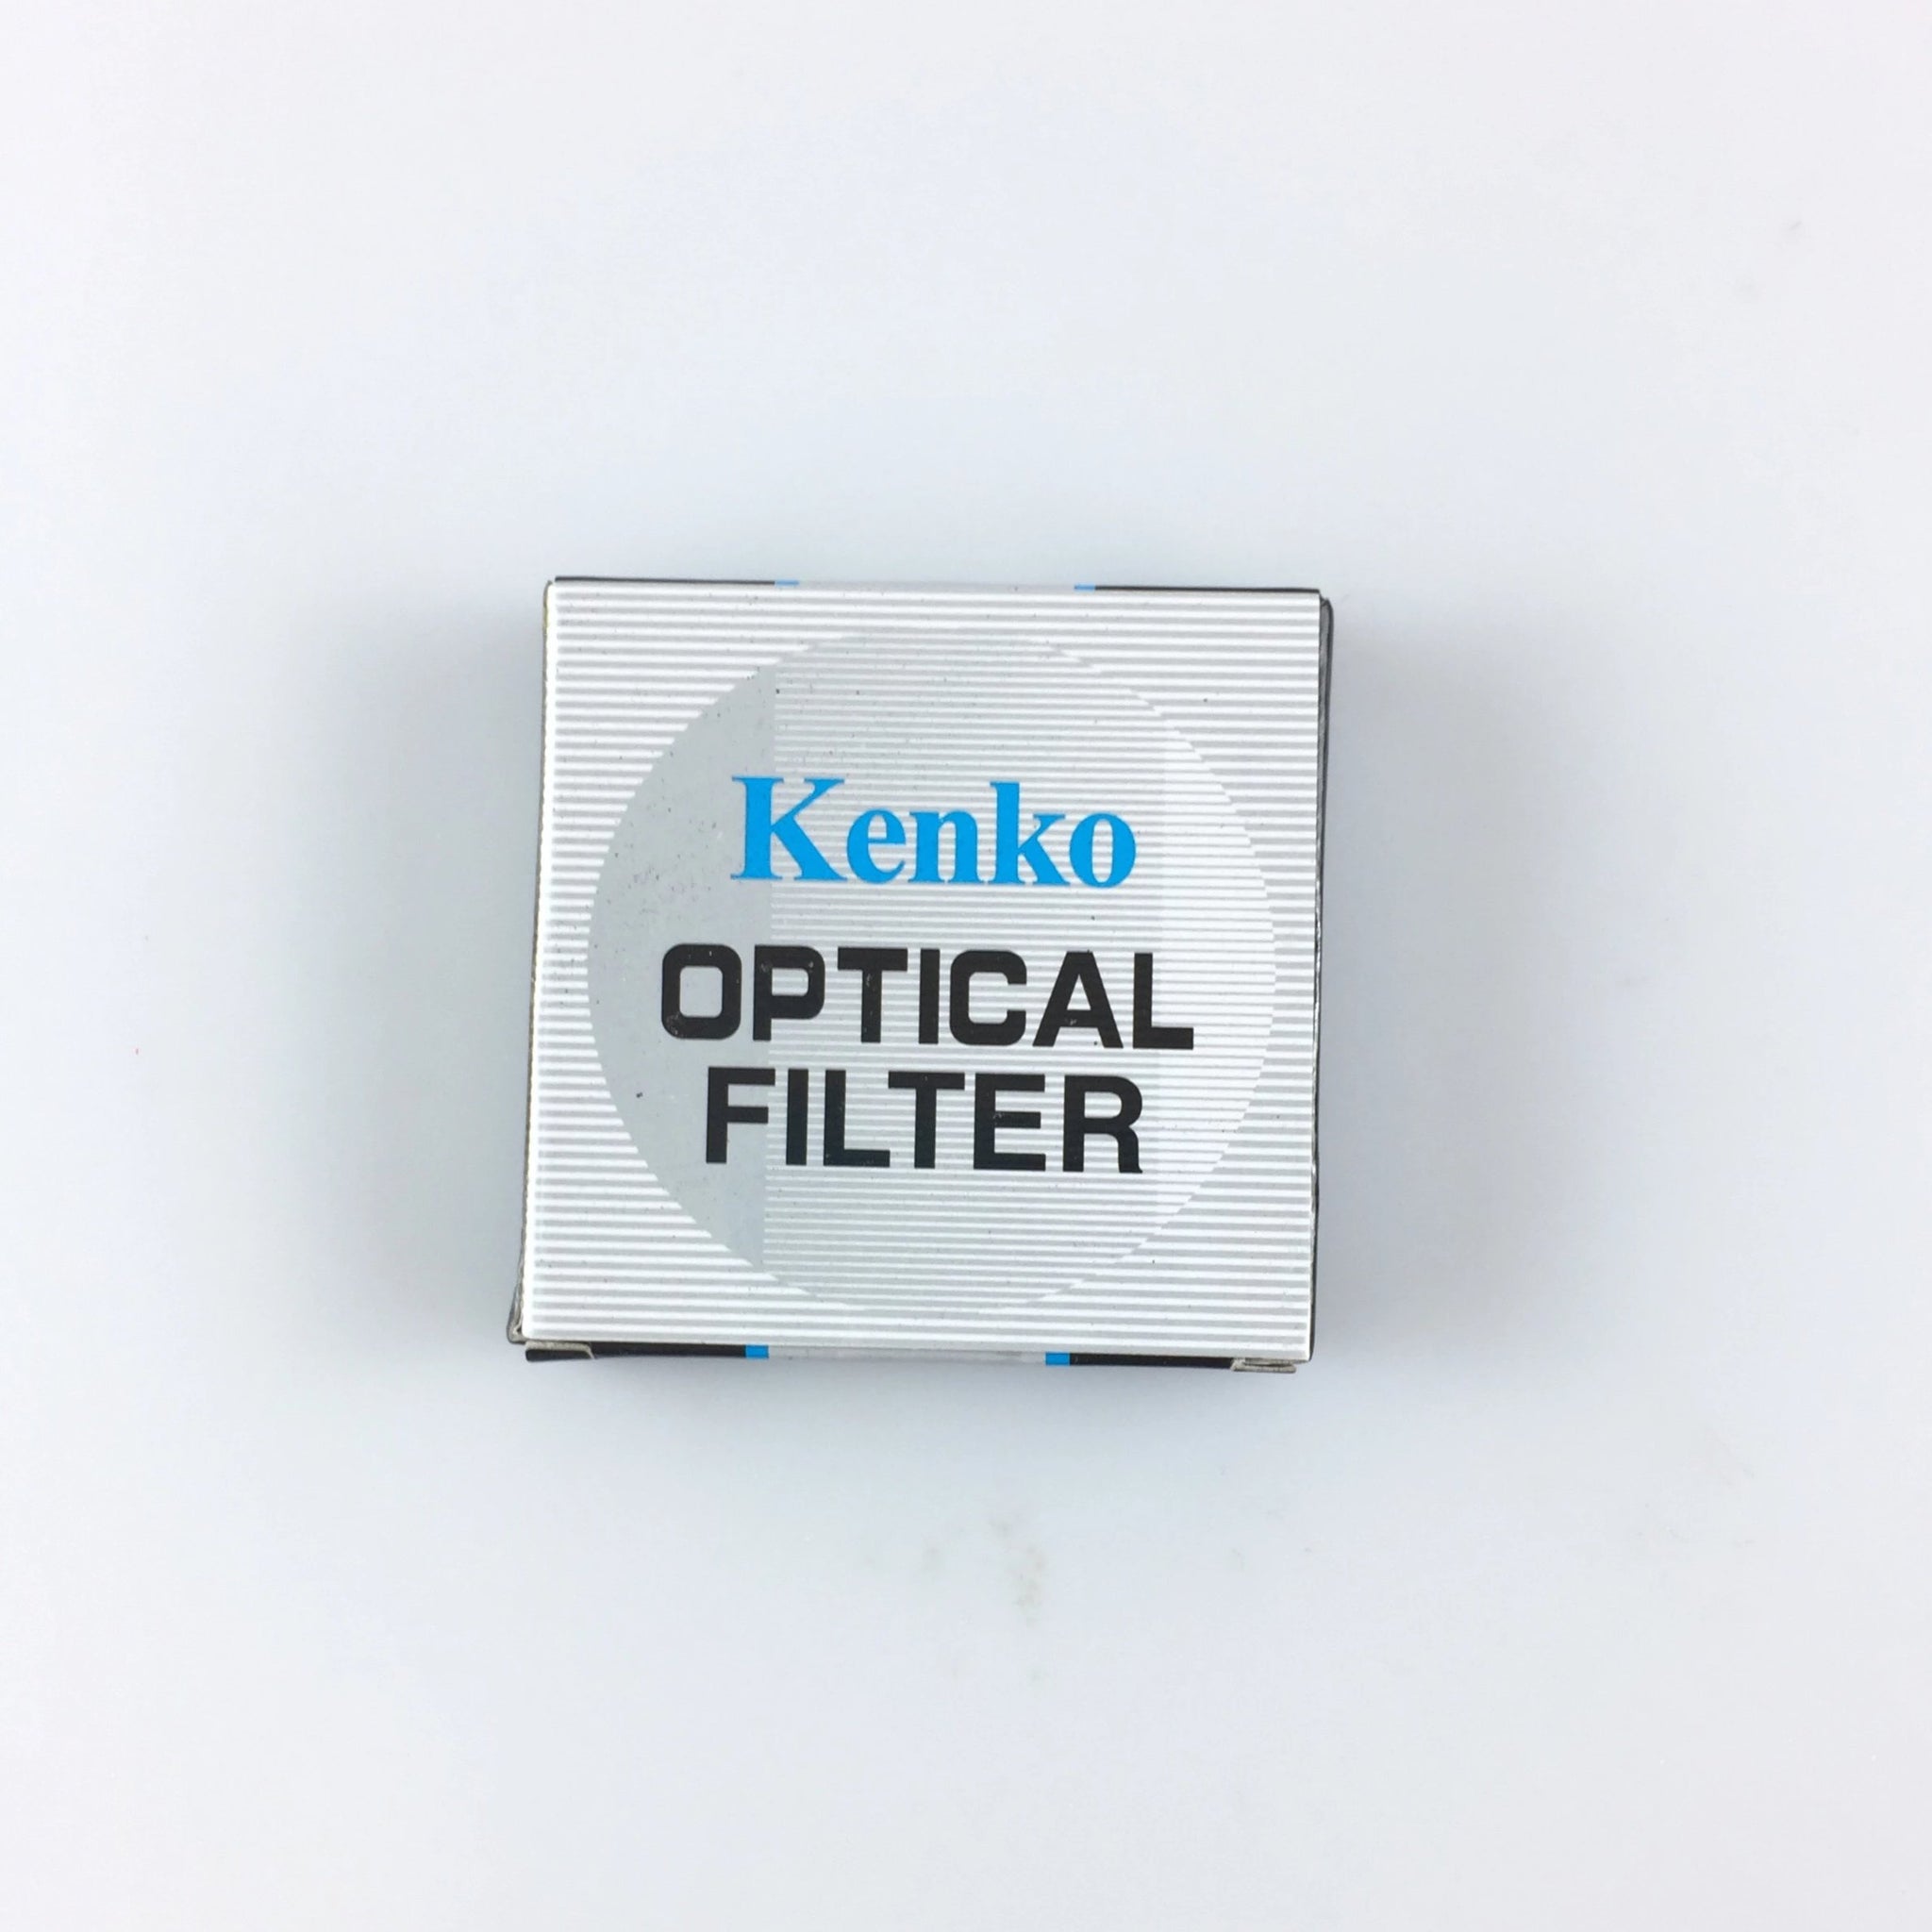 Kenko UV Optical Filter - 52mm U V Camera Filter - Made in Japan - Case Included